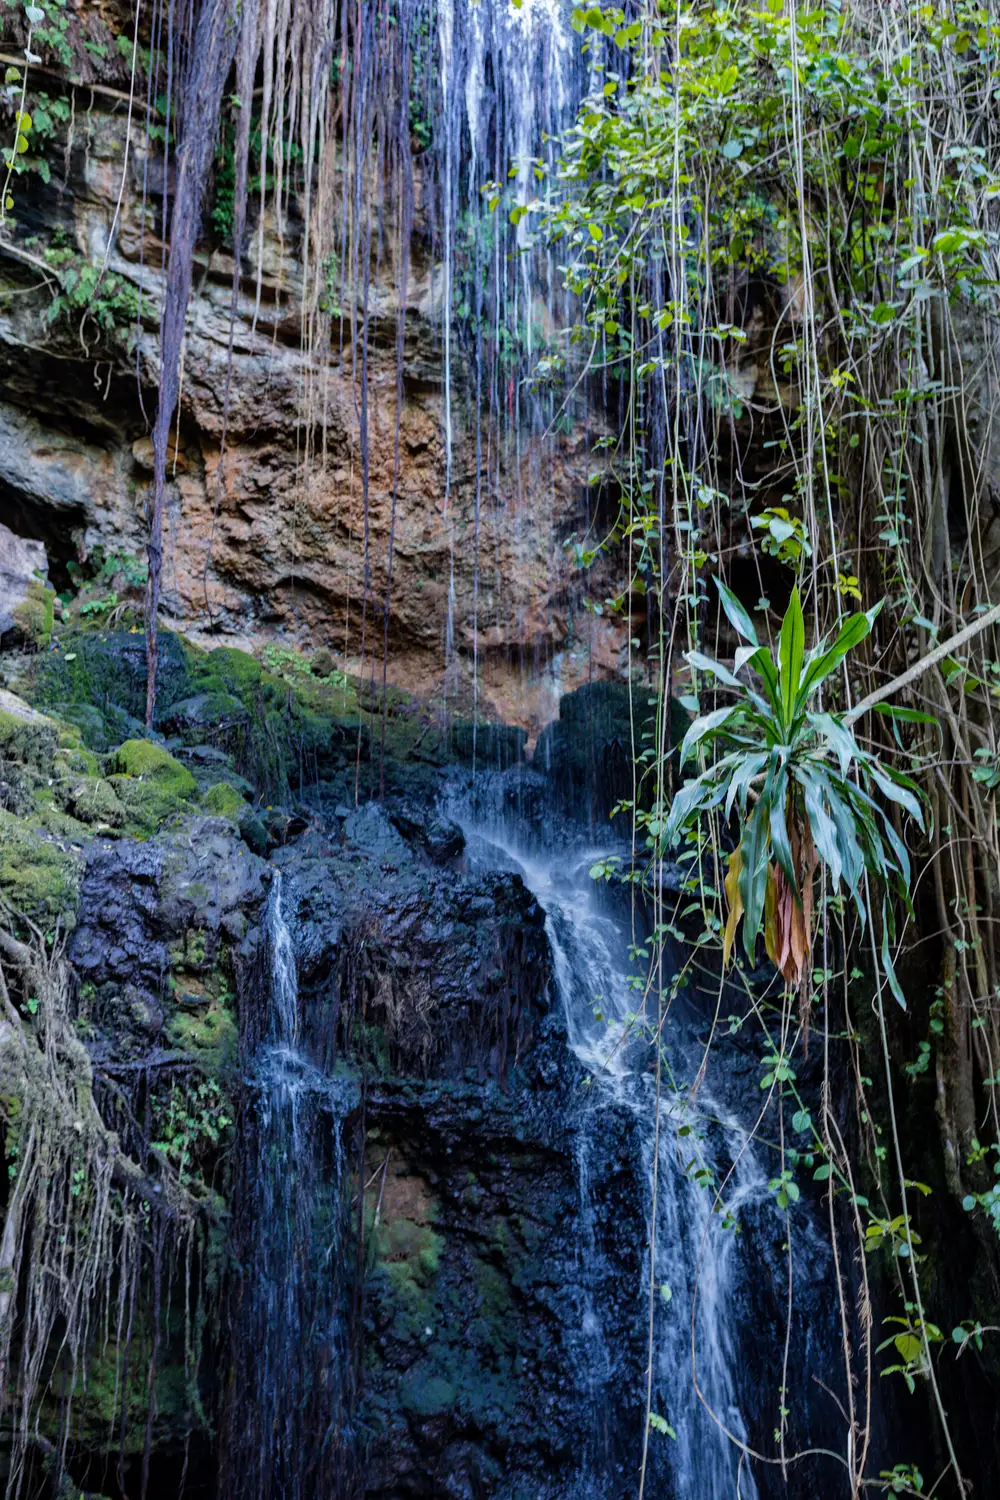 Twin waterfalls from a rock